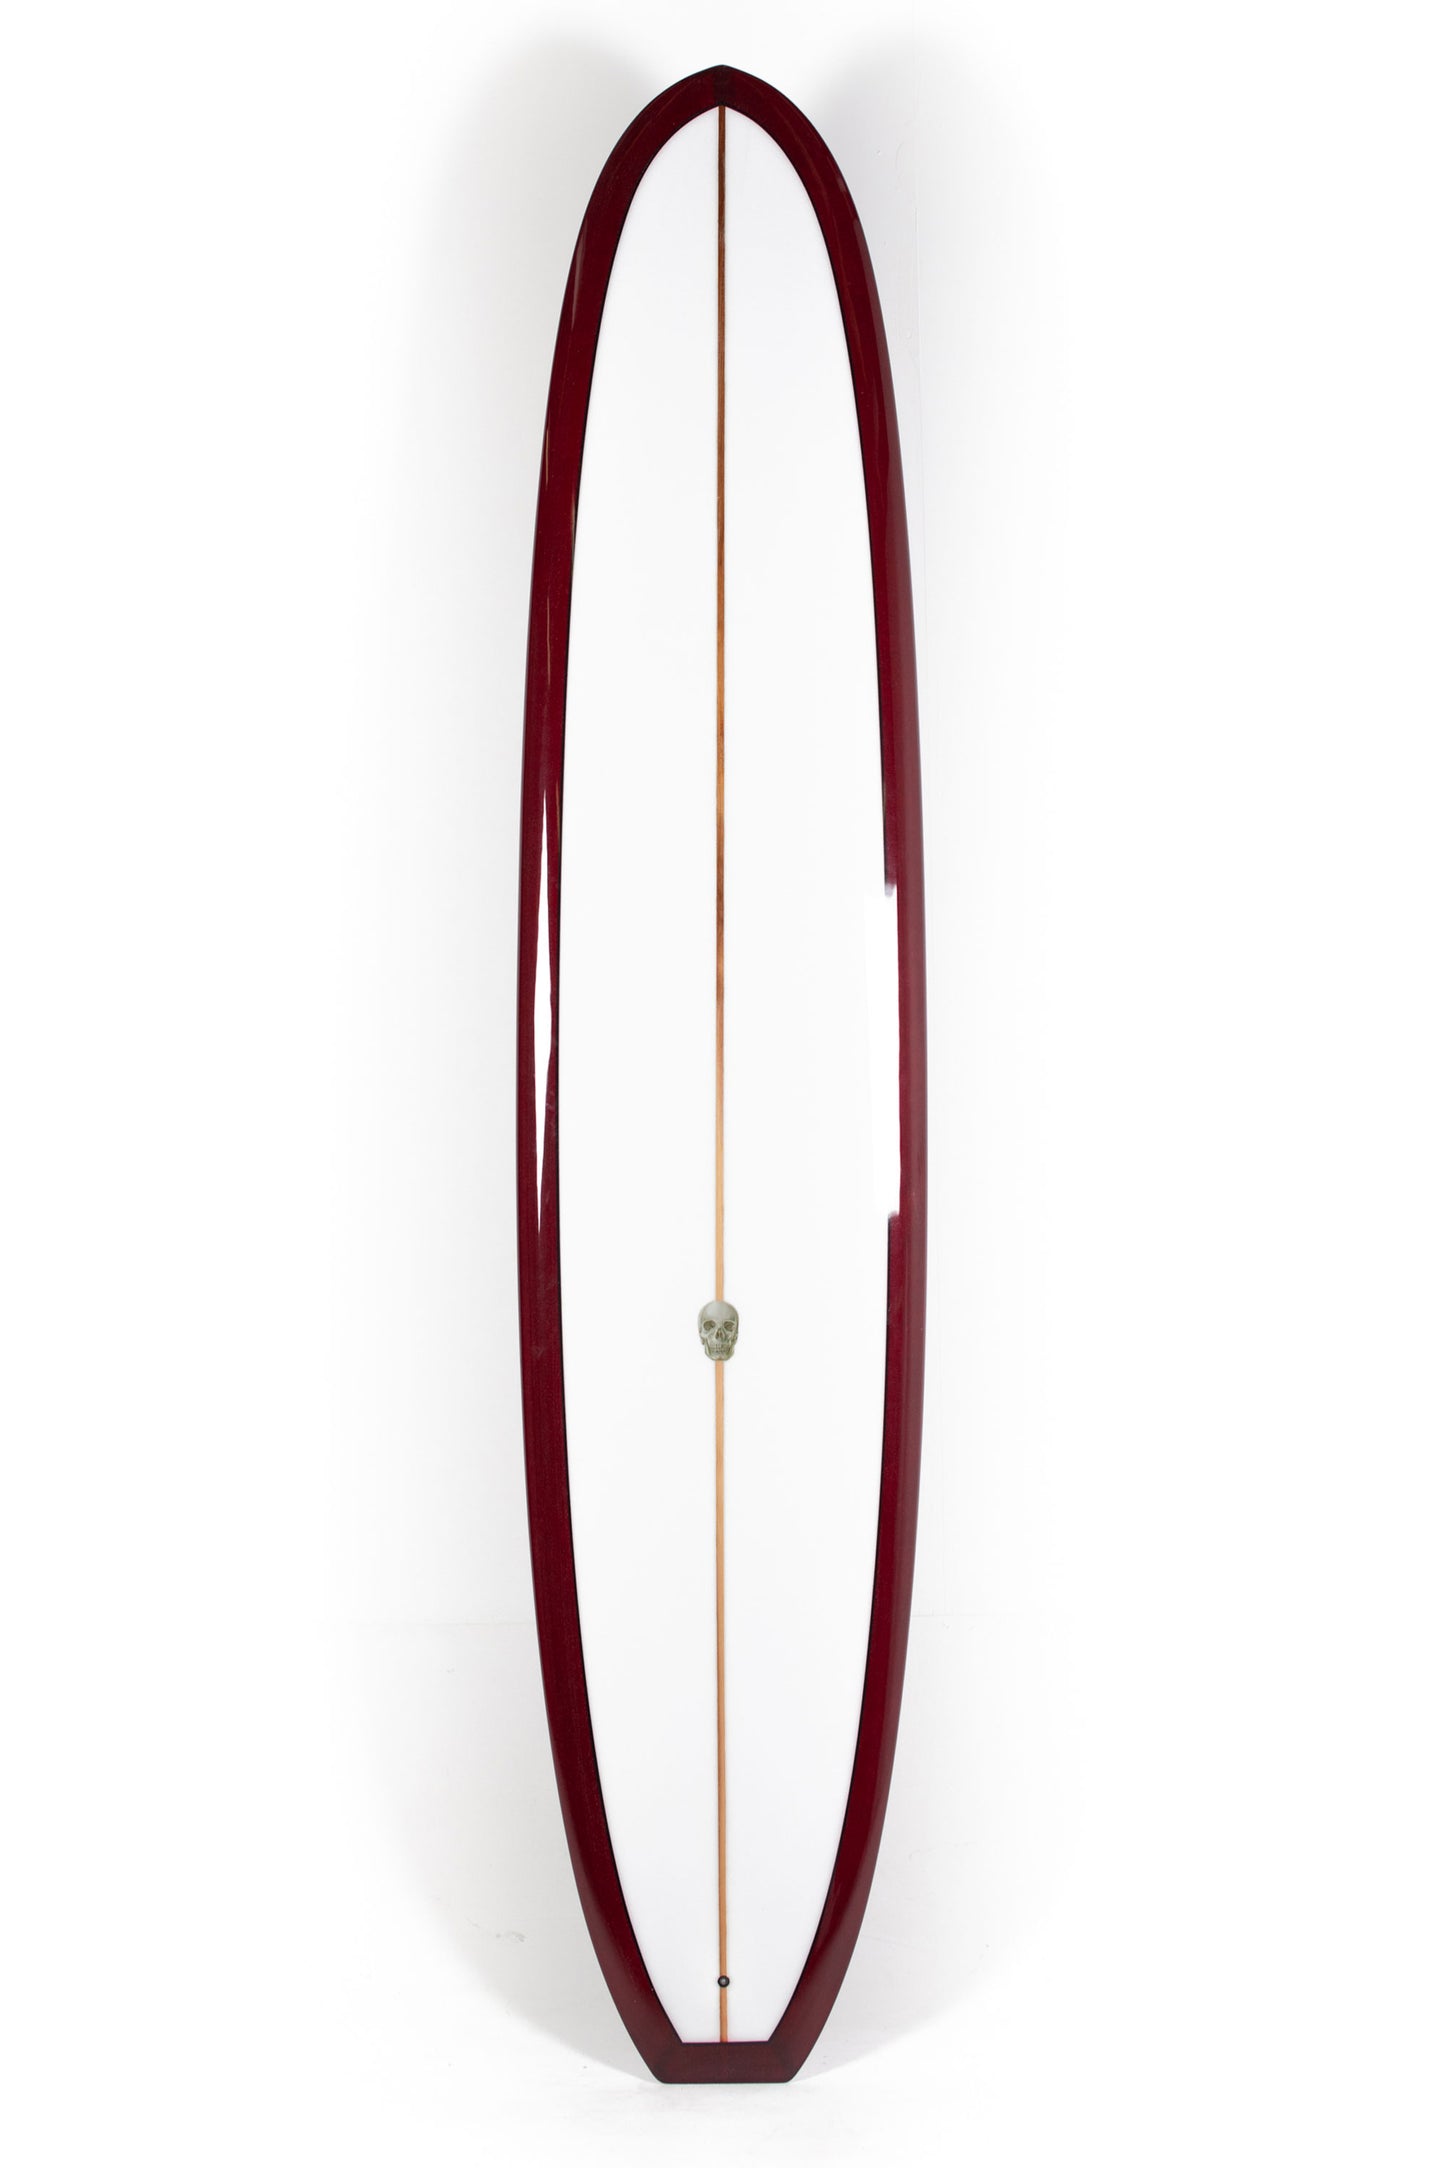 Pukas Surf Shop - Christenson Surfboard  - SCARLET BEGONIA by Chris Christenson - 9'5” x 23 3/16" x 2 13/16" - CX05367